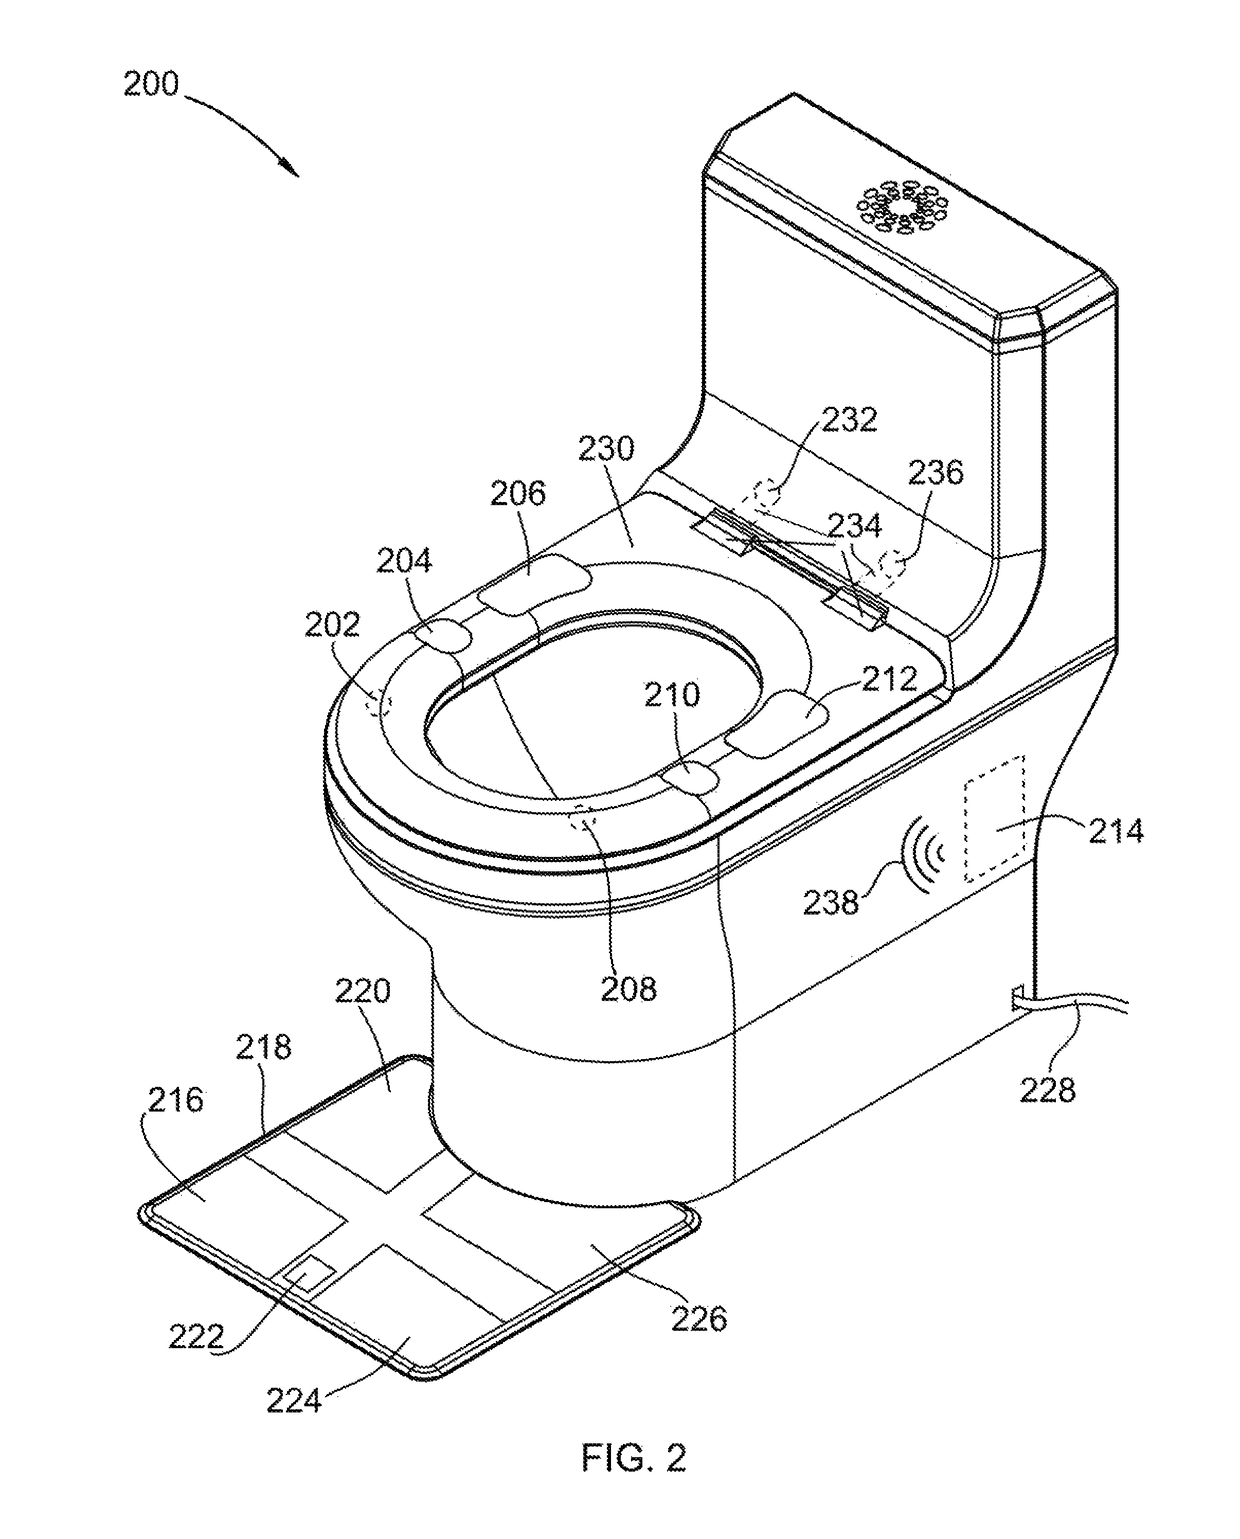 User identifying toilet apparatus